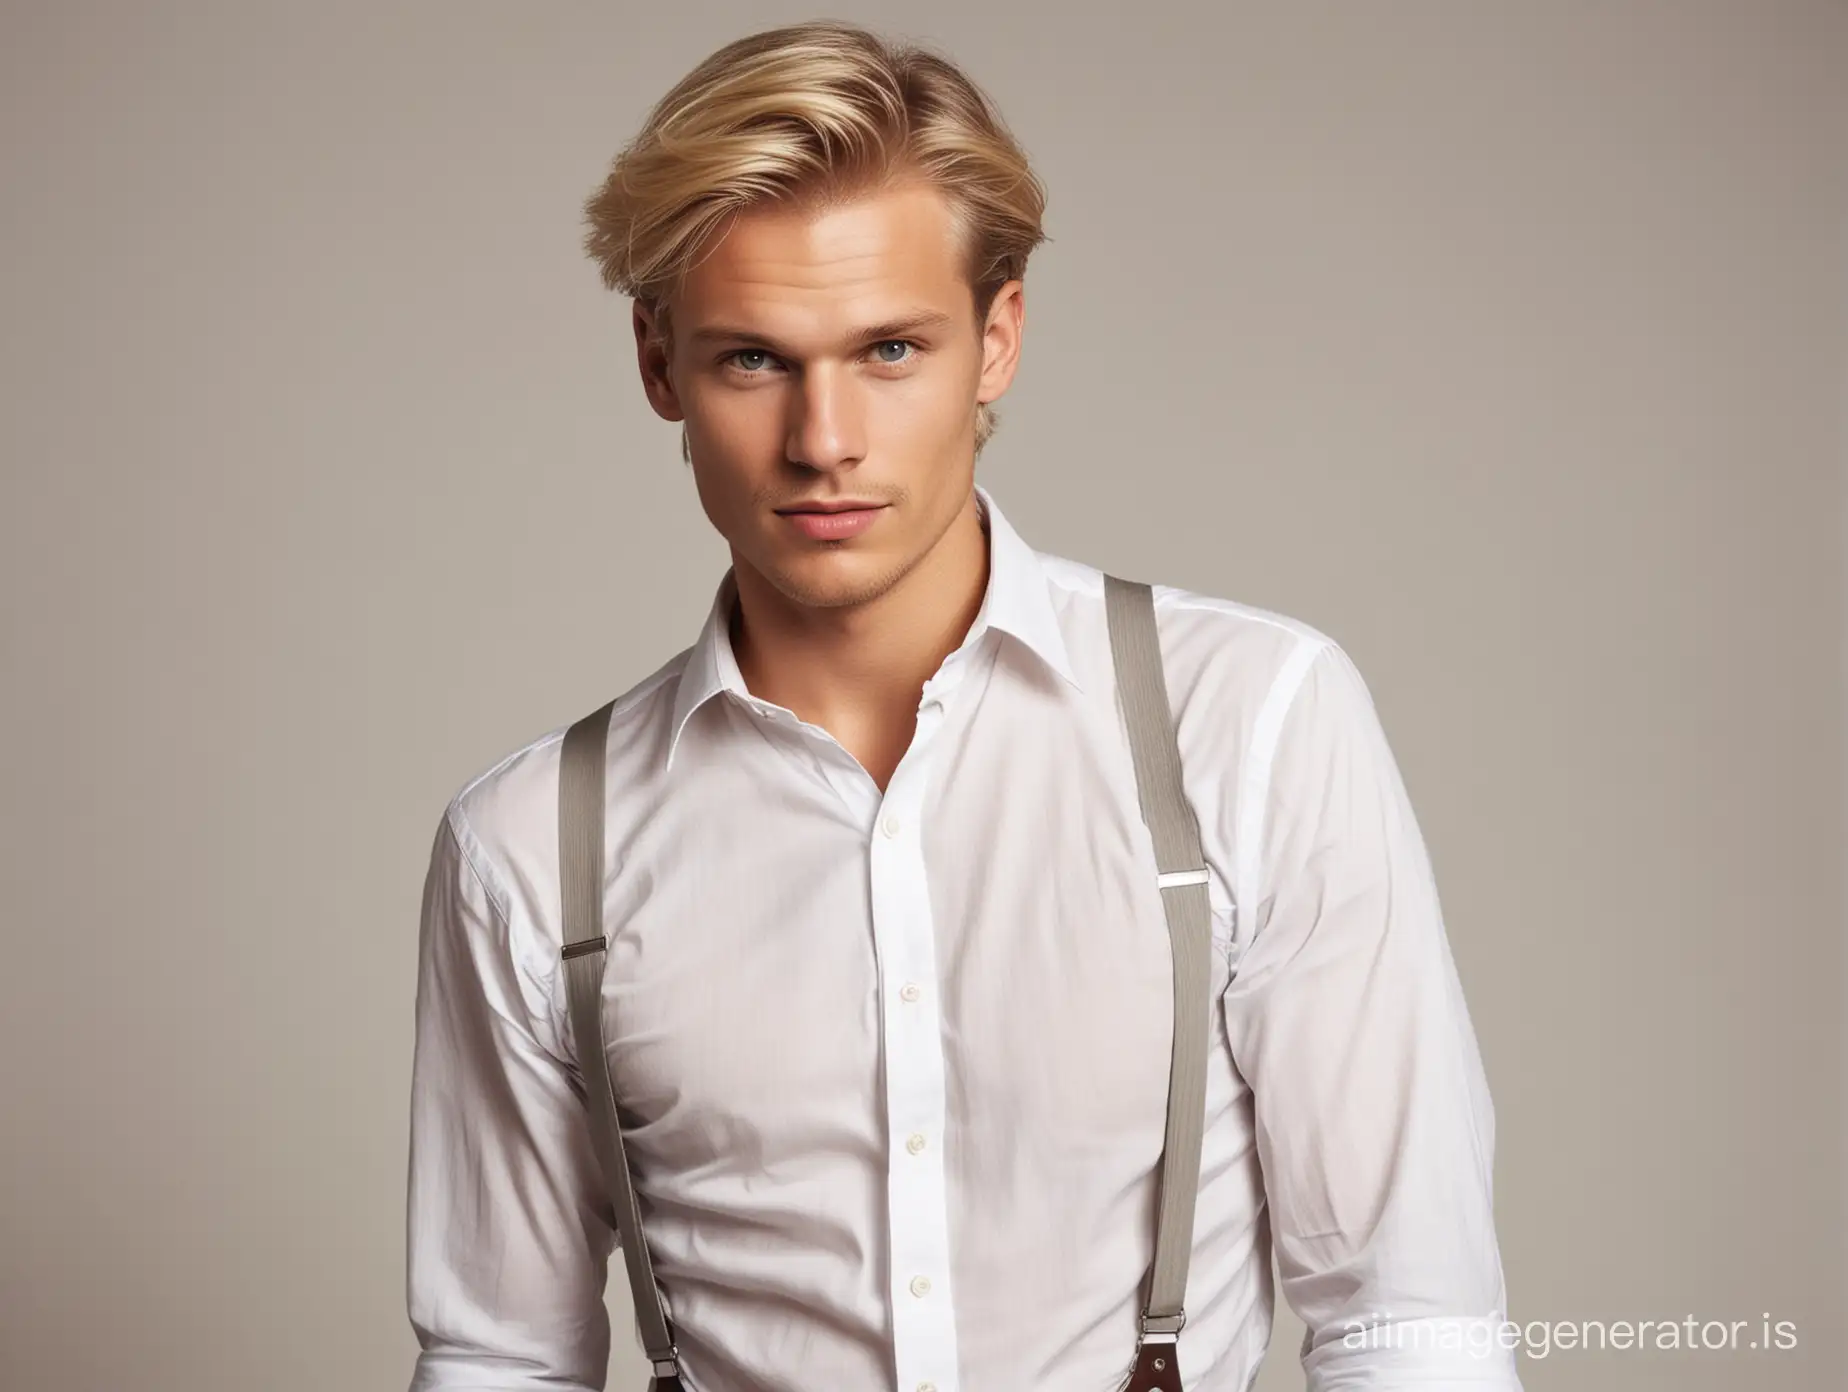 Handsome-Swedish-Gentleman-in-Suspenders-and-White-Shirt